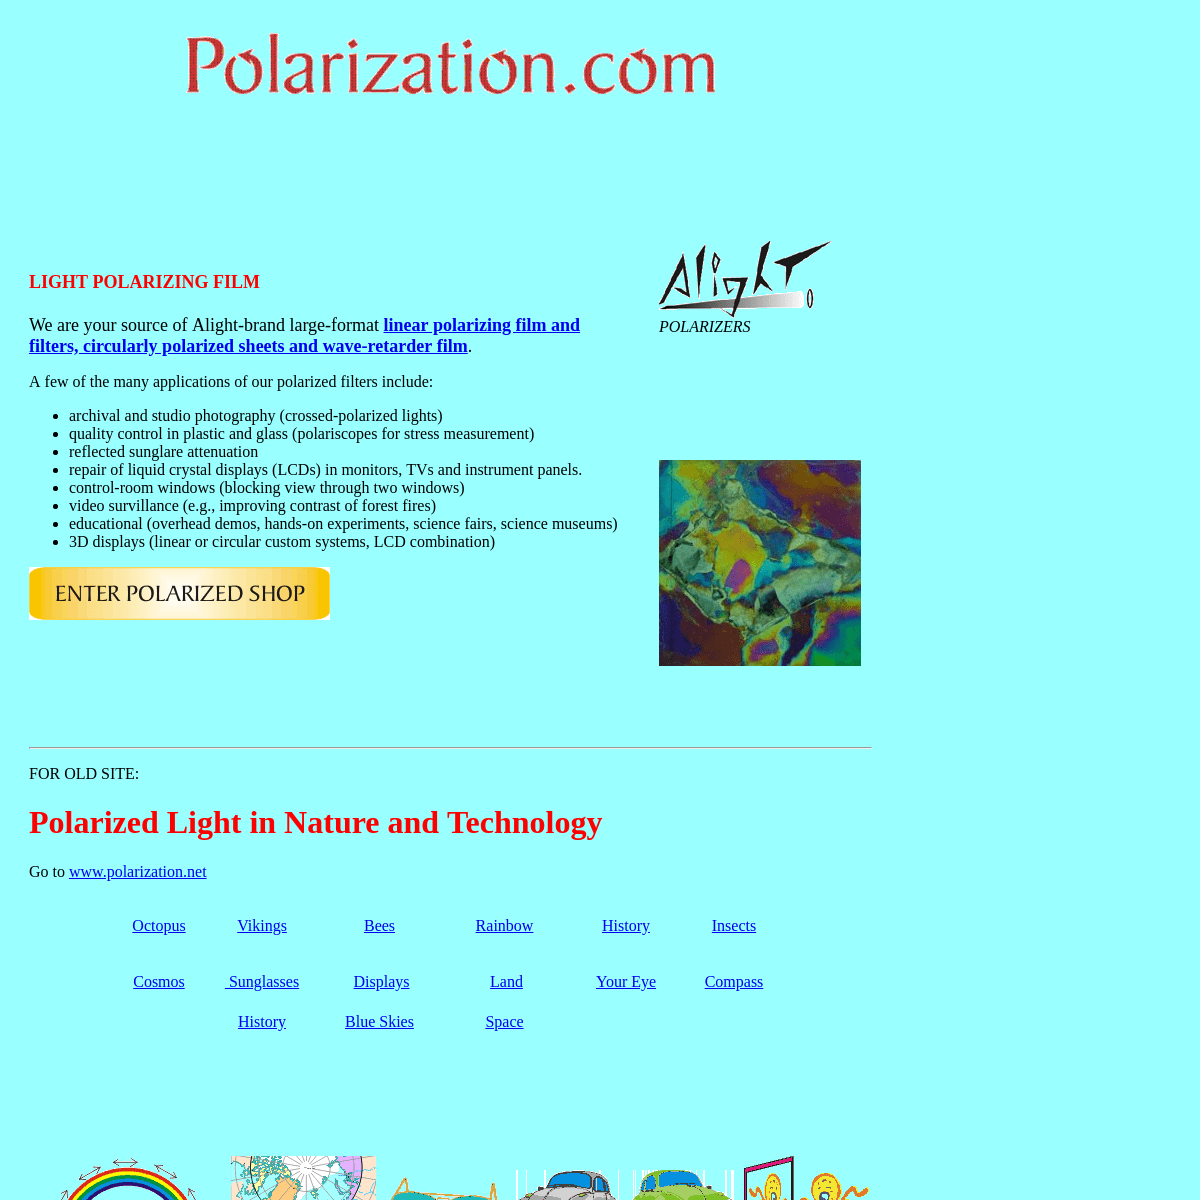 A complete backup of polarization.com